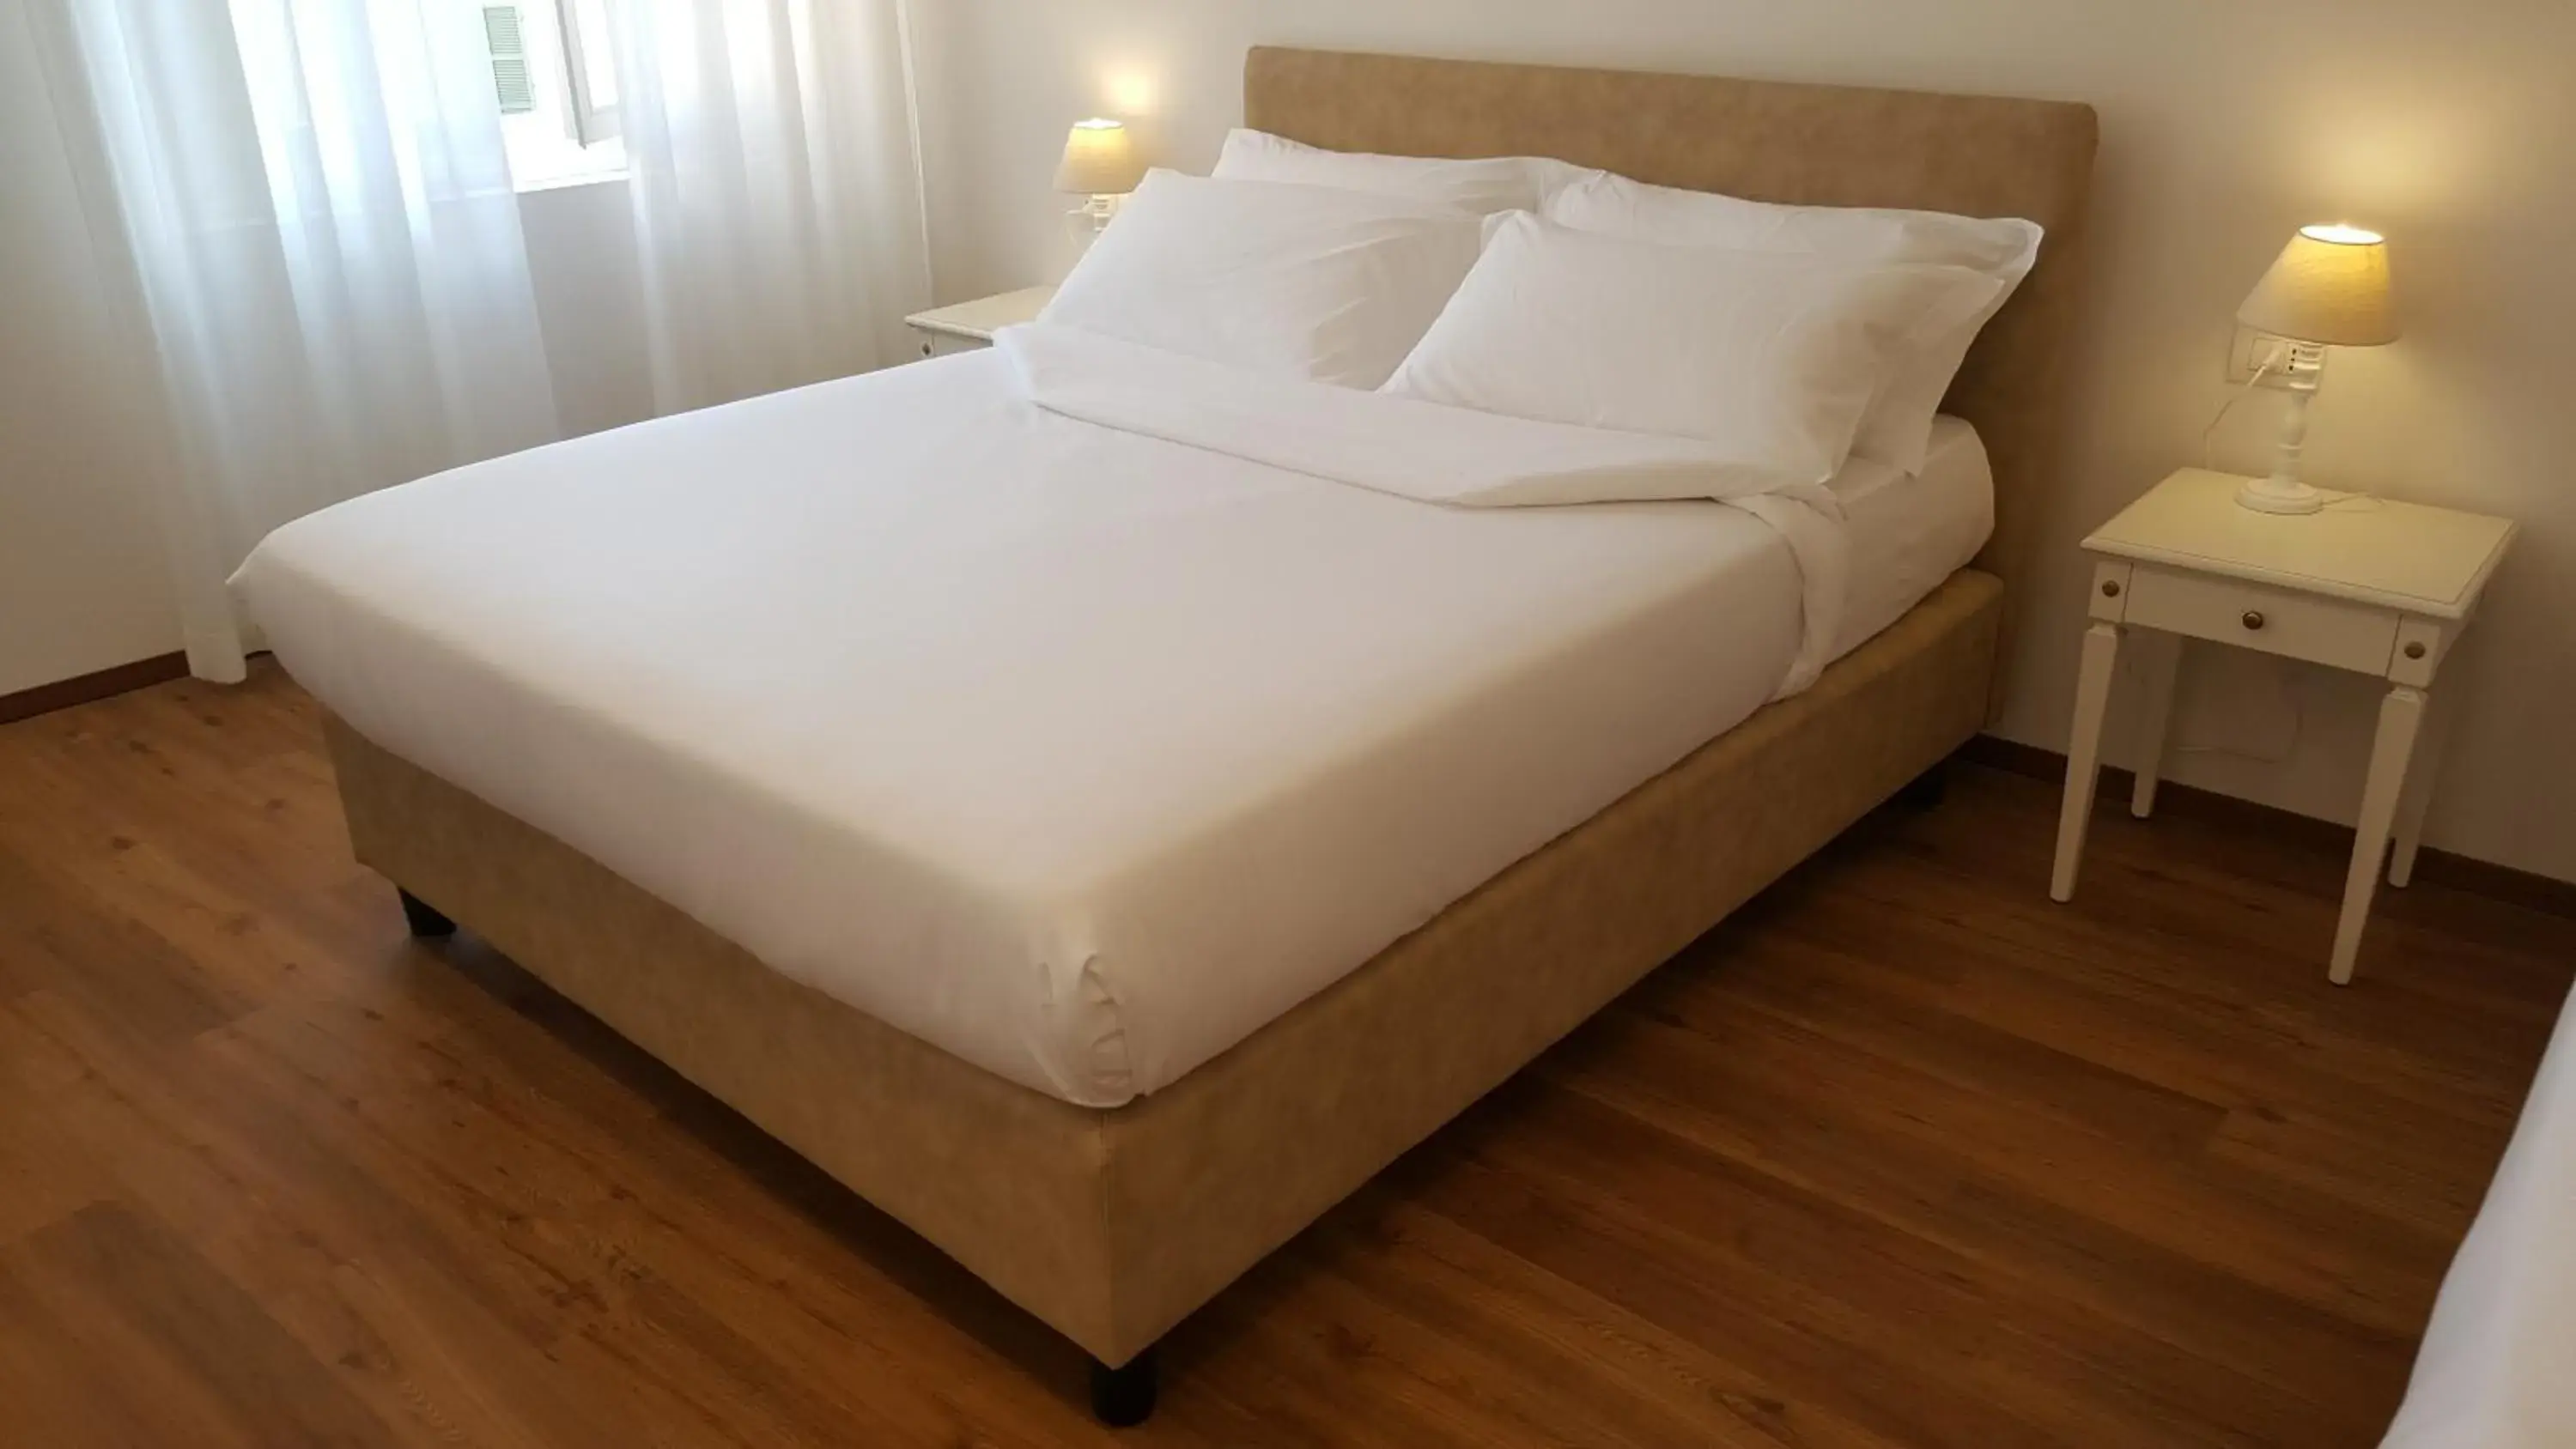 Bed, Room Photo in Albergo La Rocca